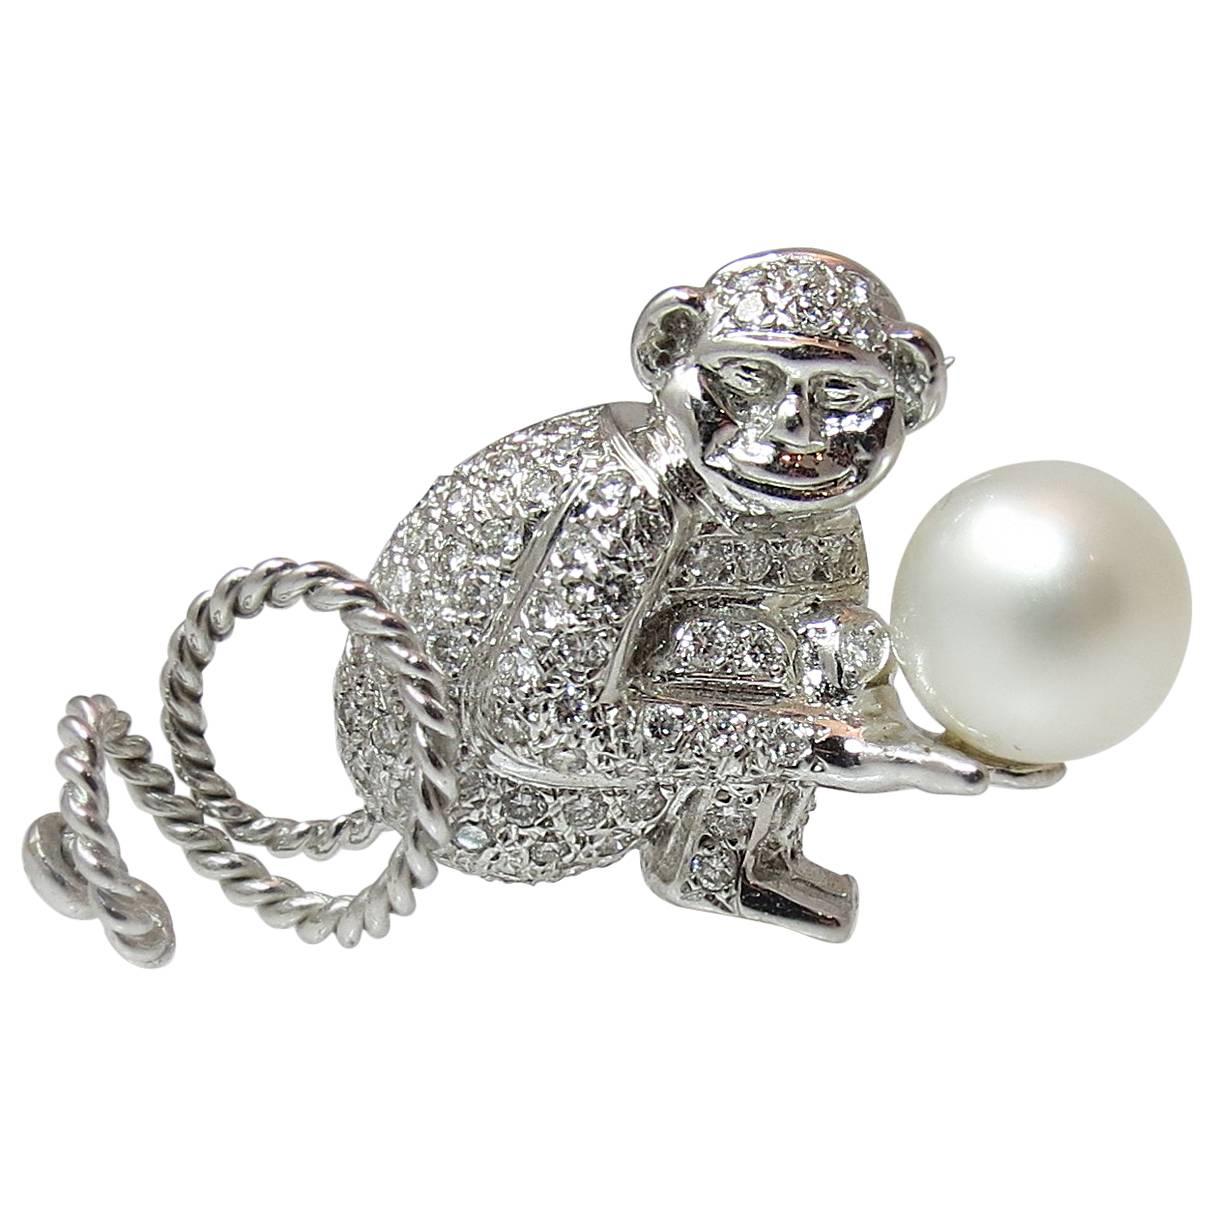 Adorable 18K White Gold Diamond and South Sea Pearl Monkey Pin